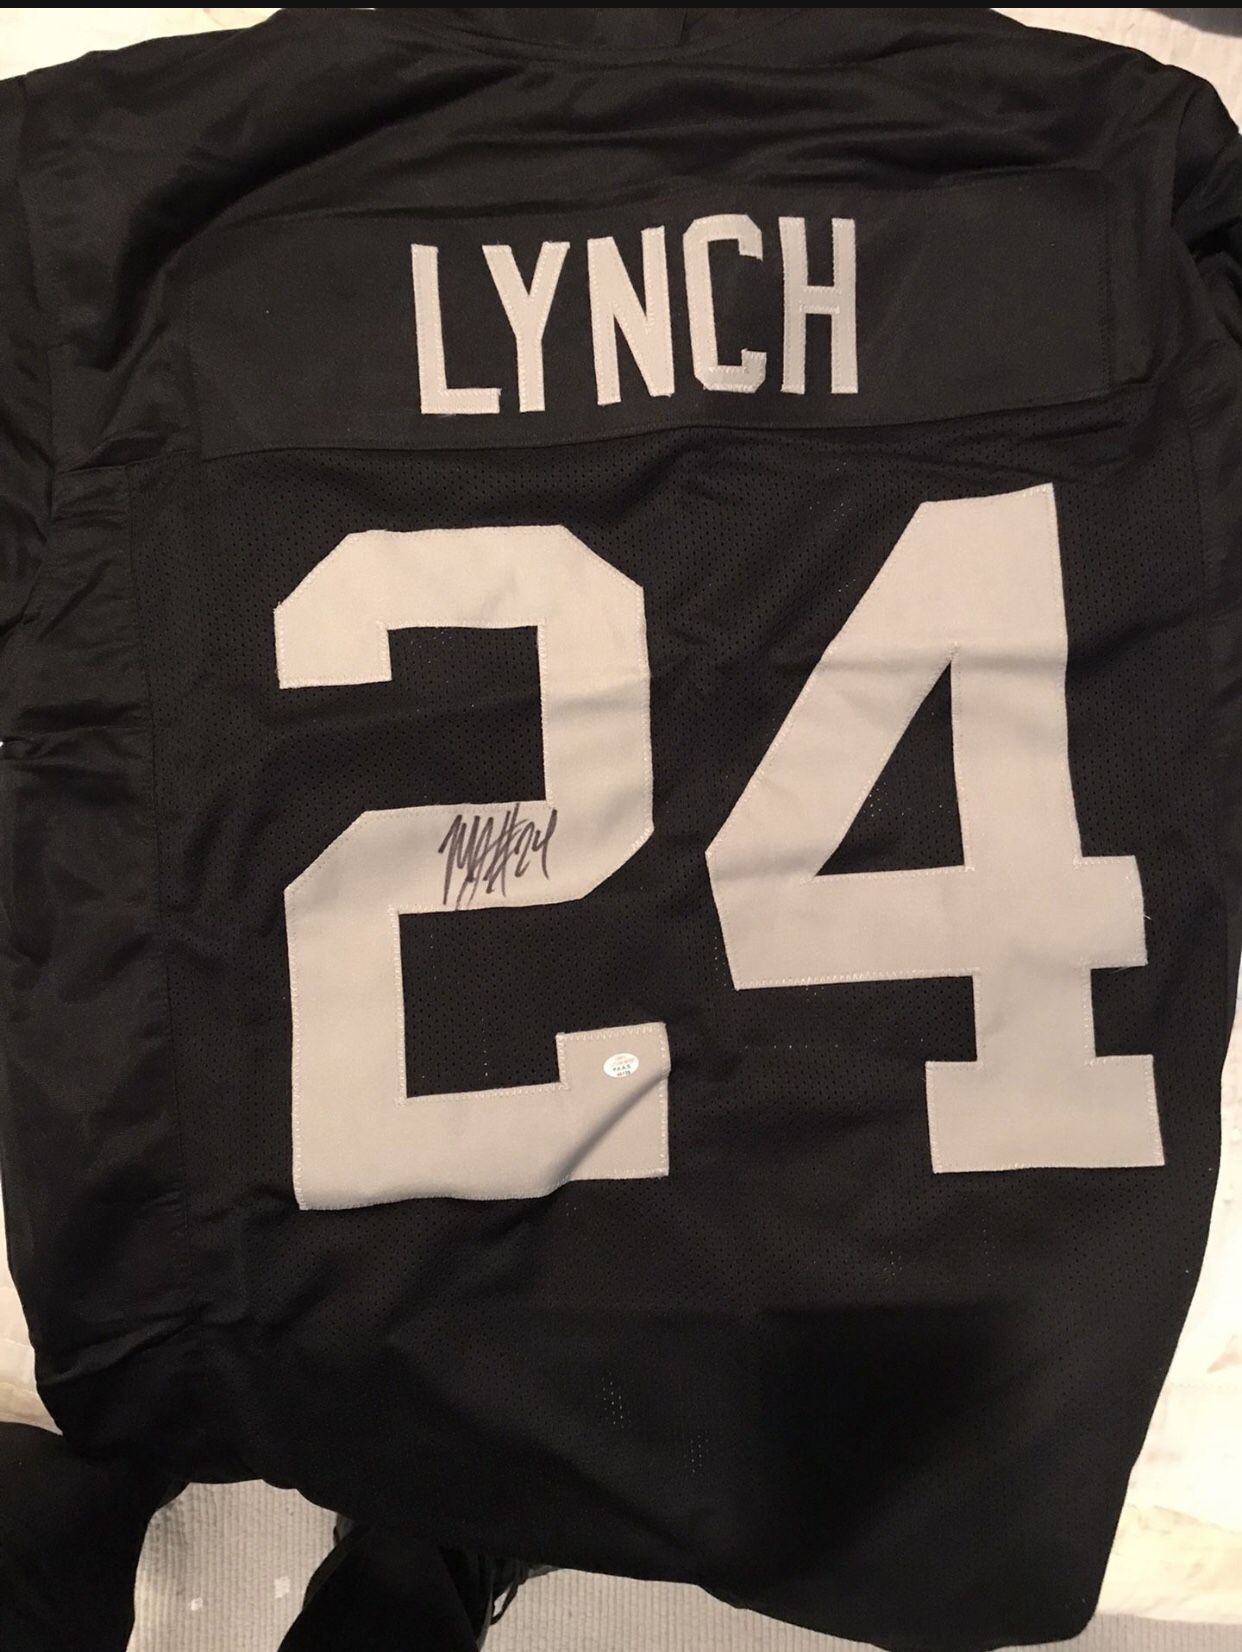 Abram Lynch 24 Raiders Signed Jersey